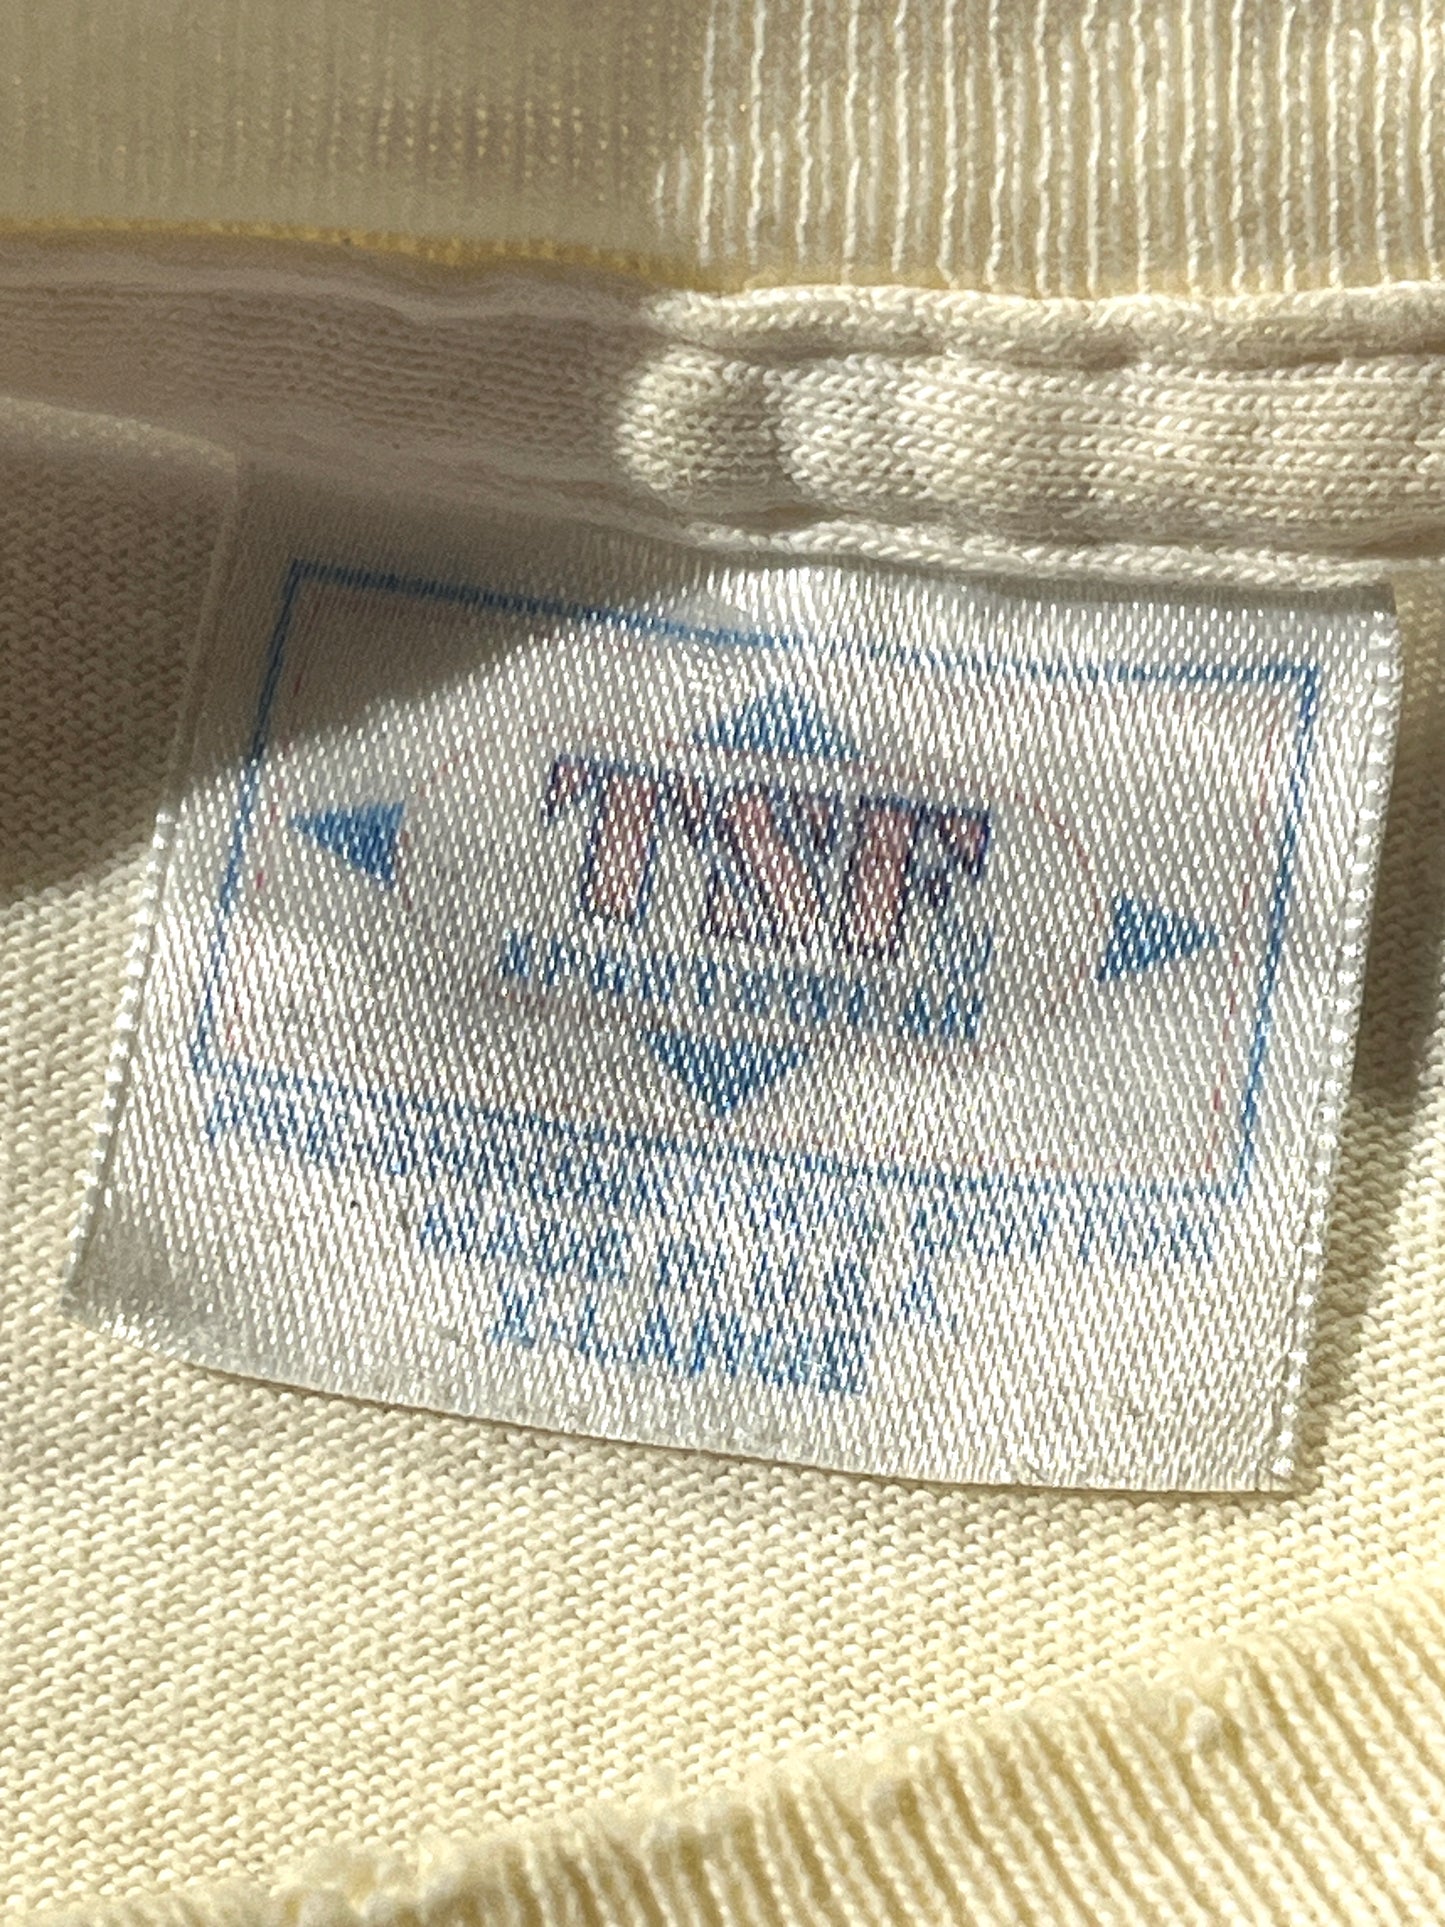 Vintage Key West T-Shirt Single Stitch 1994